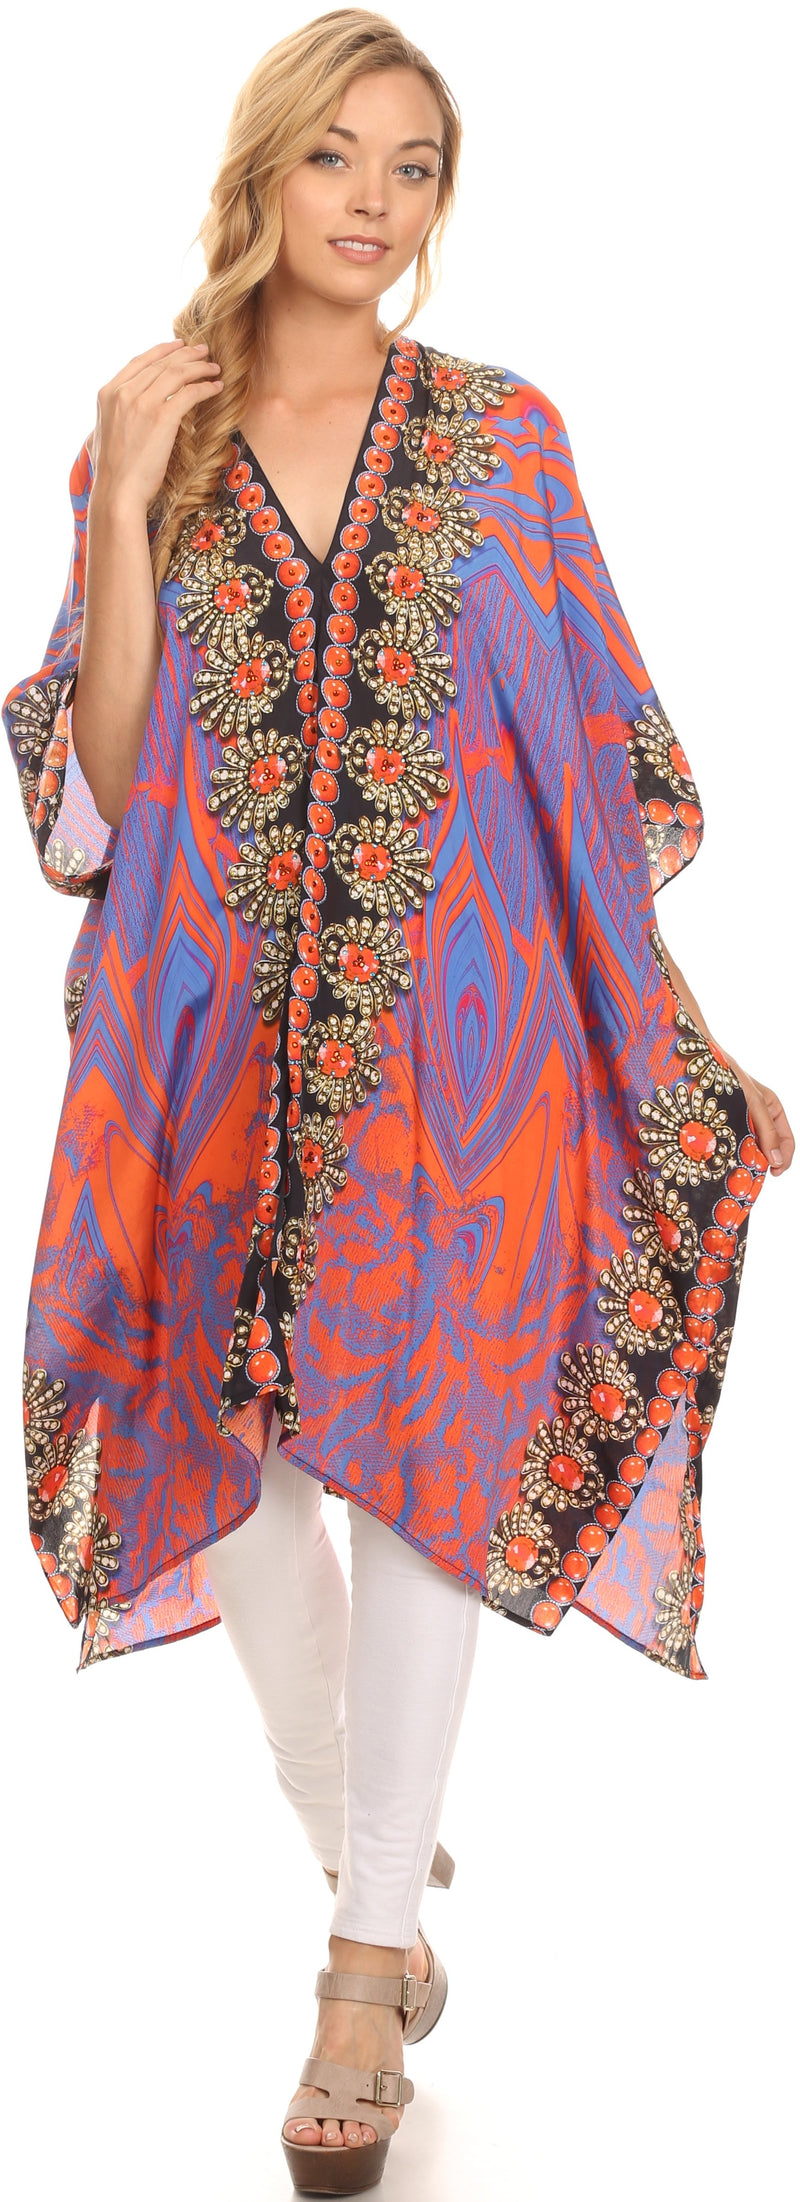 Sakkas Libra Mid Length Caftan Dress / Cover Up With Tribal Print / Rhinestones